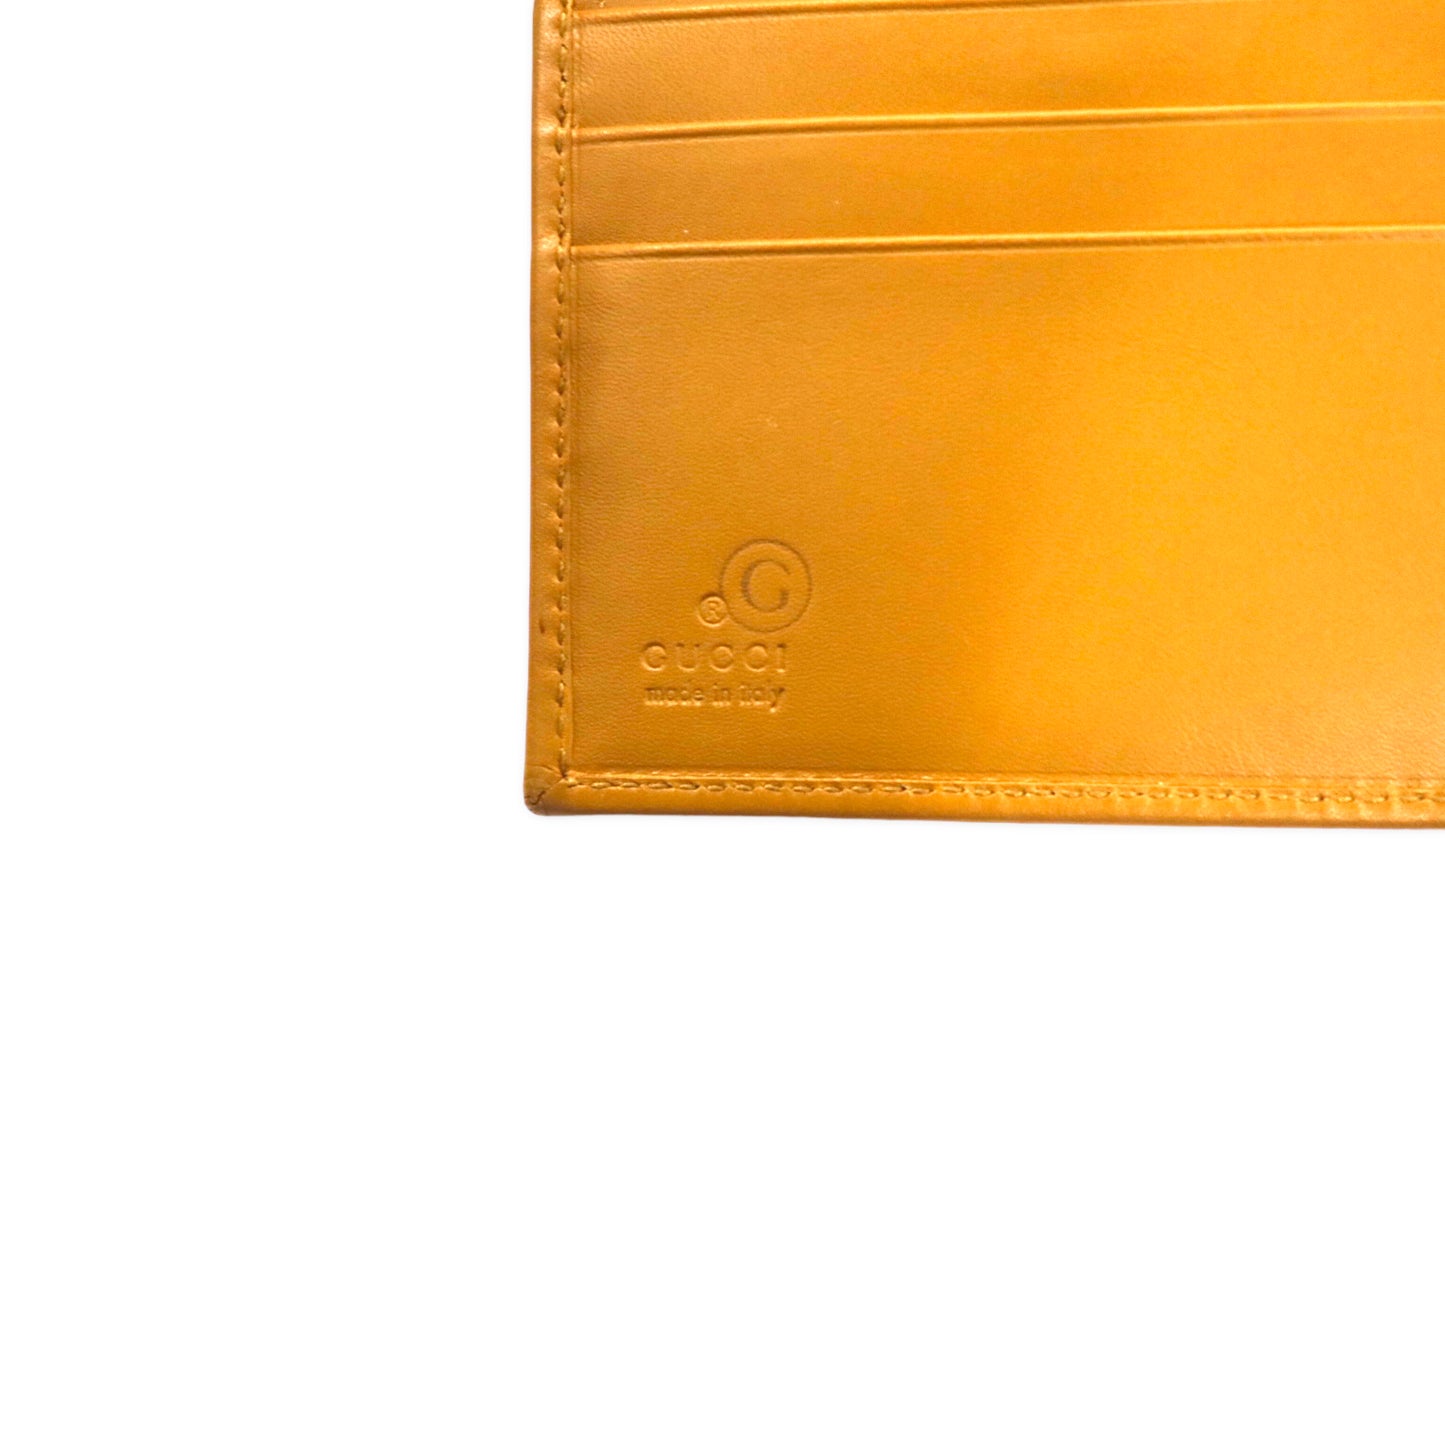 GUCCI Wホック ジャッキー 2つ折り財布 ベージュ スエード レザー 035 2140 2169 イタリア製 未使用品